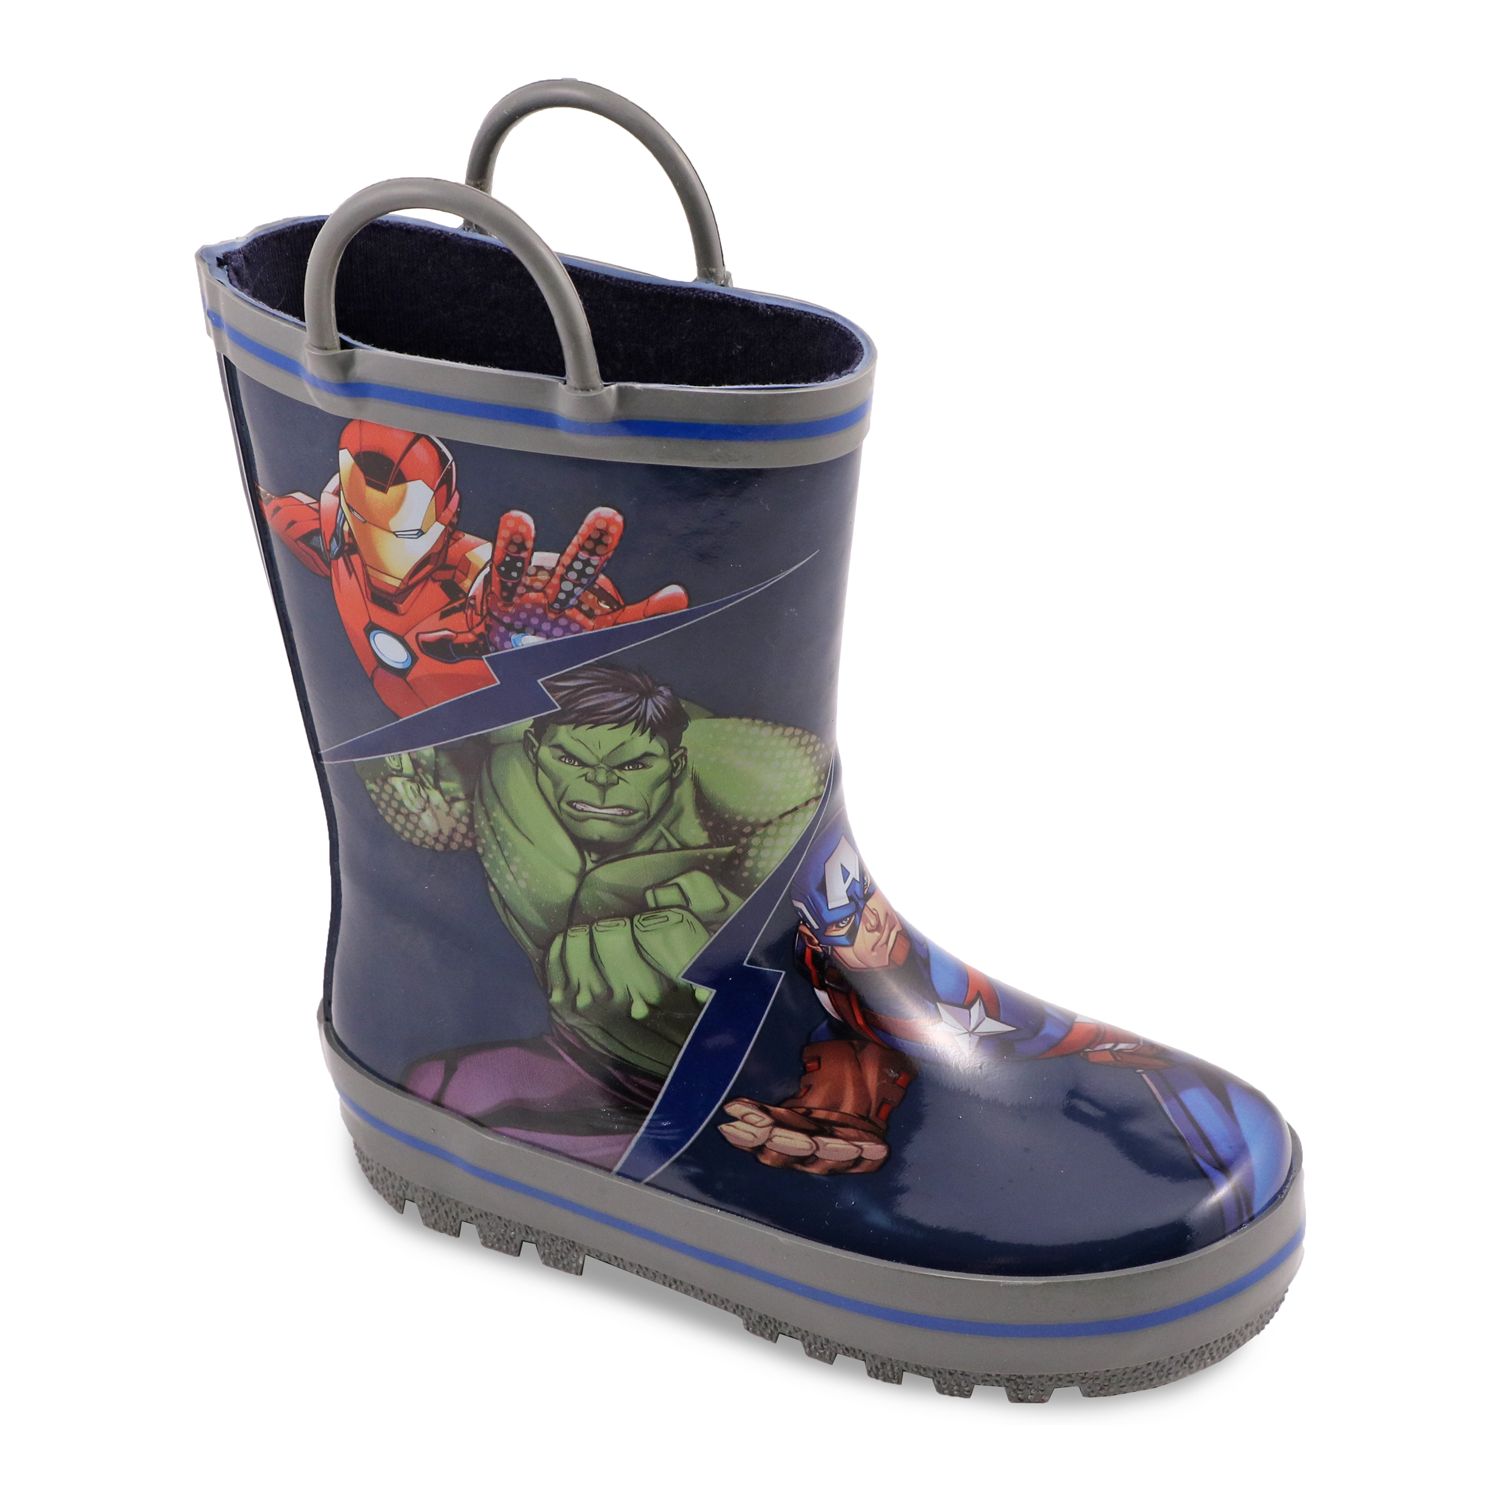 avengers rain boots